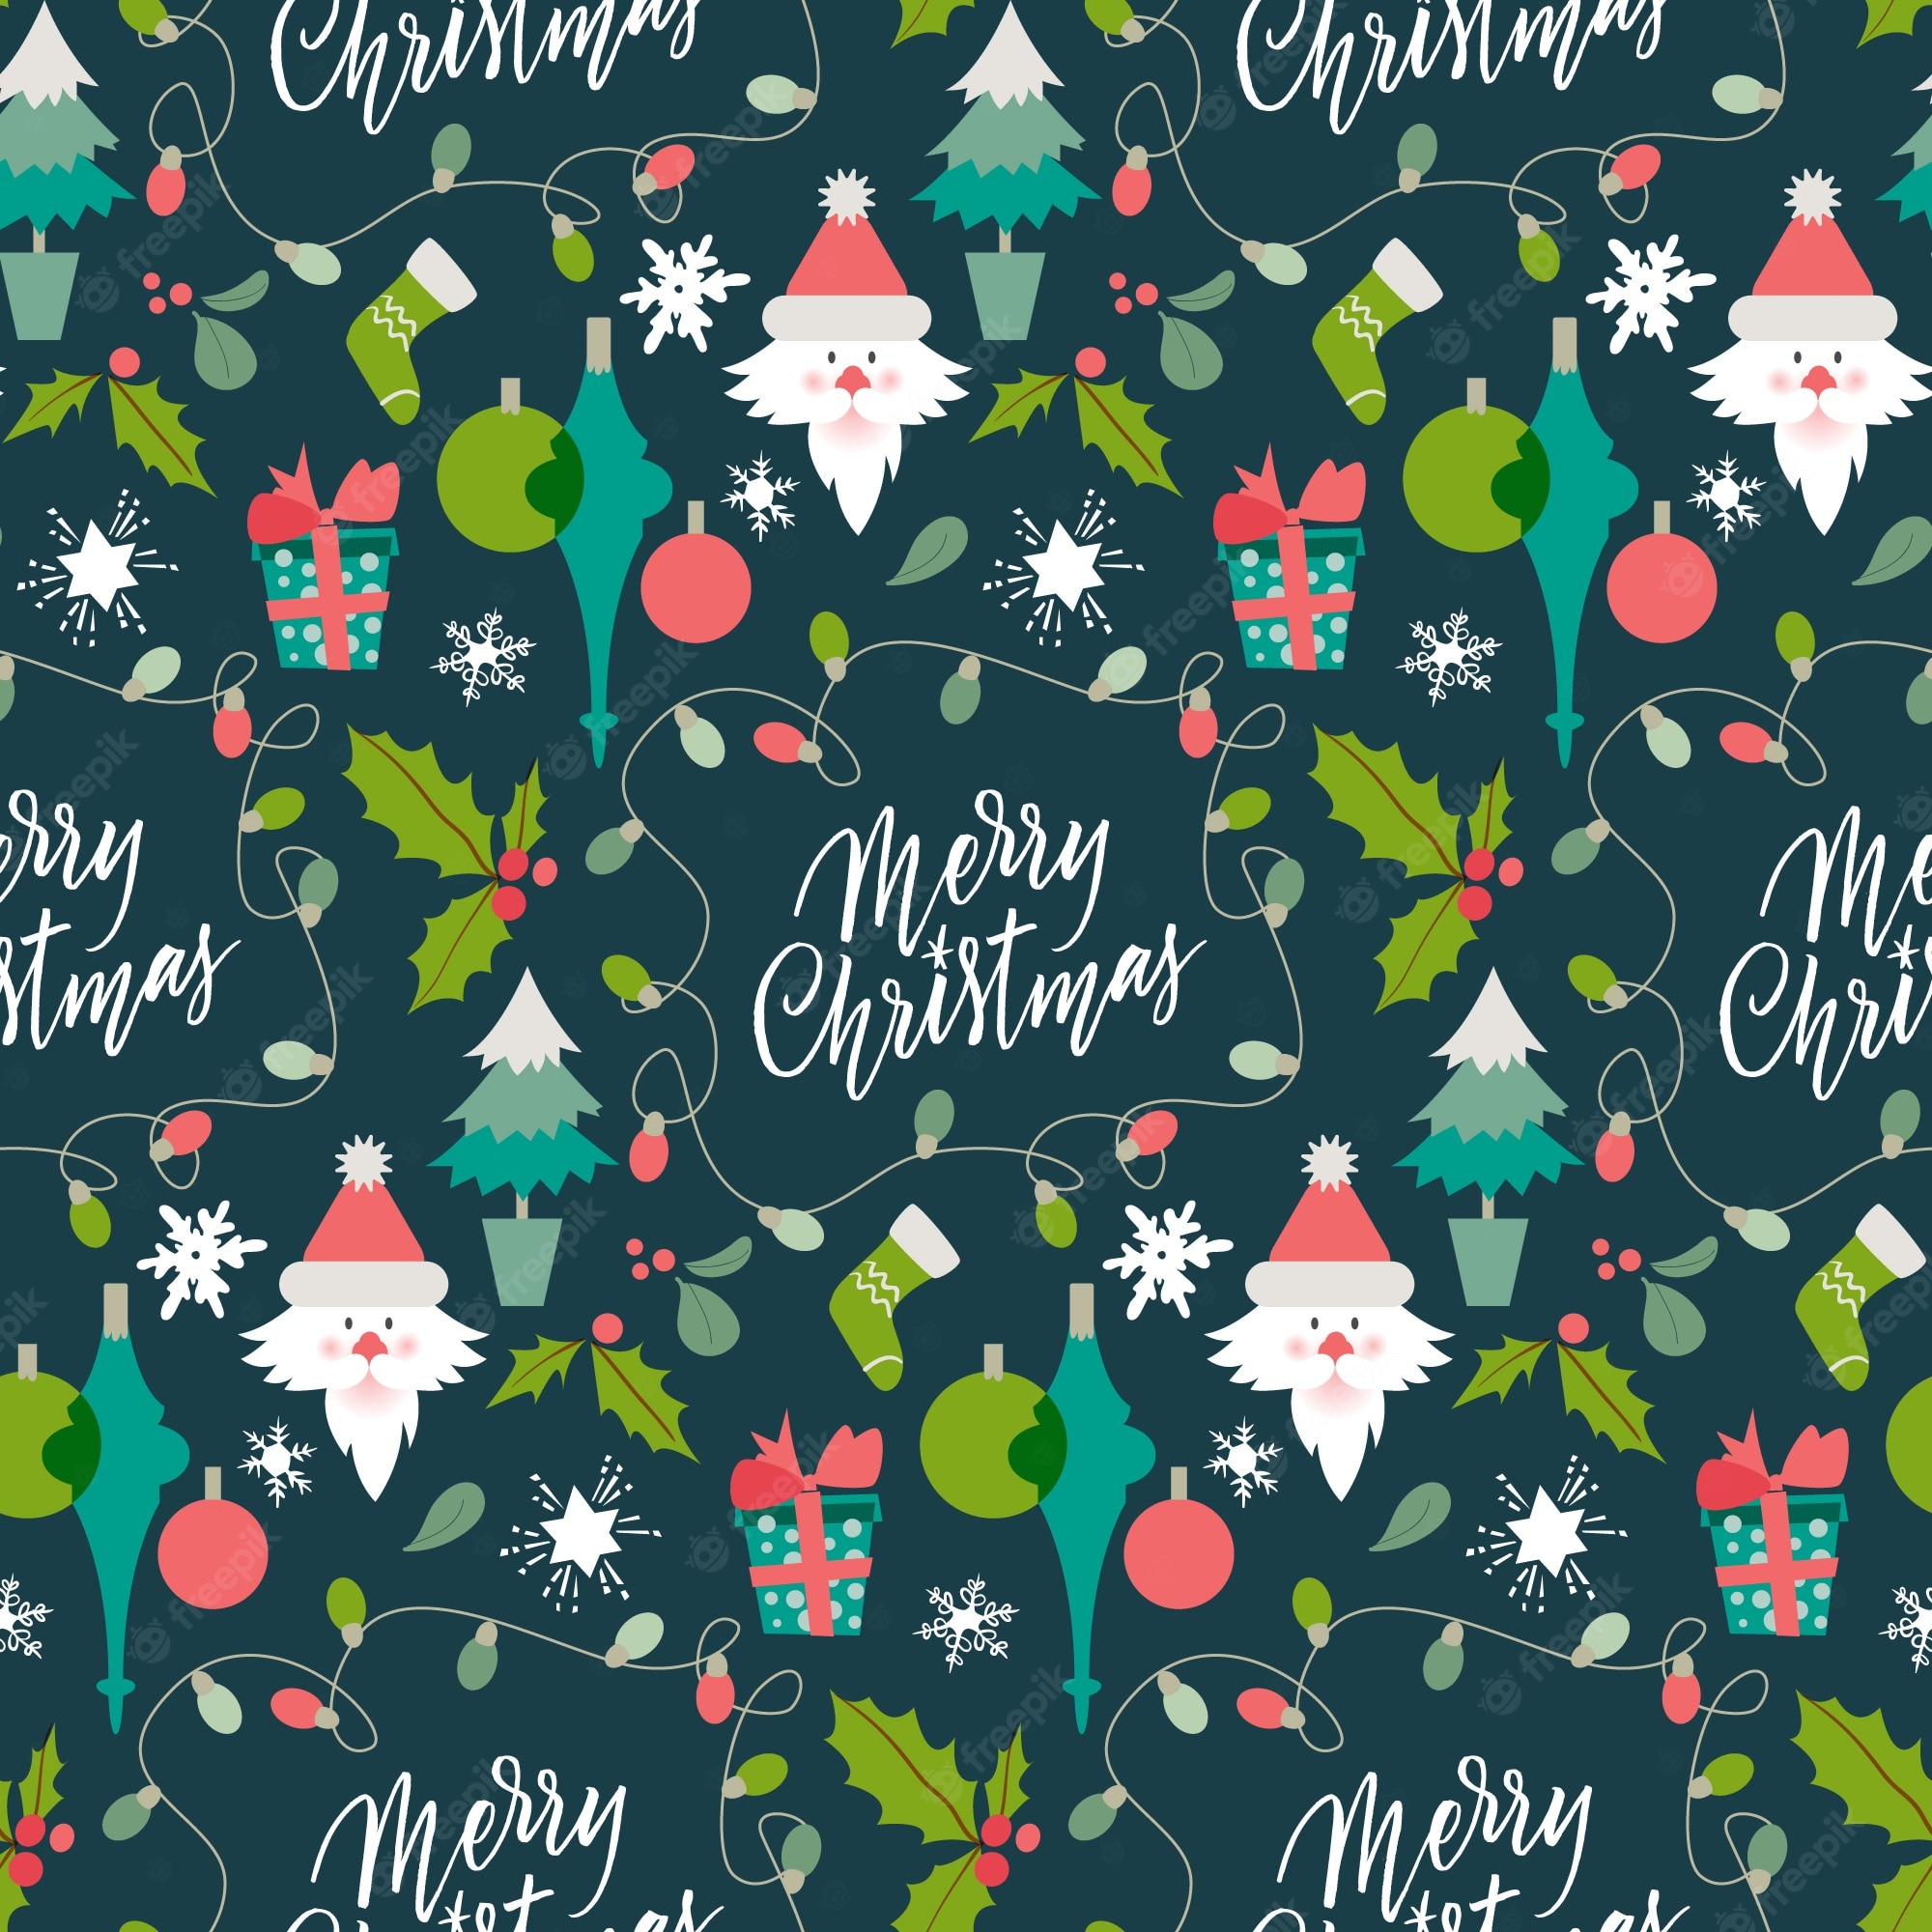 Christmas pattern wallpaper Image. Free Vectors, & PSD